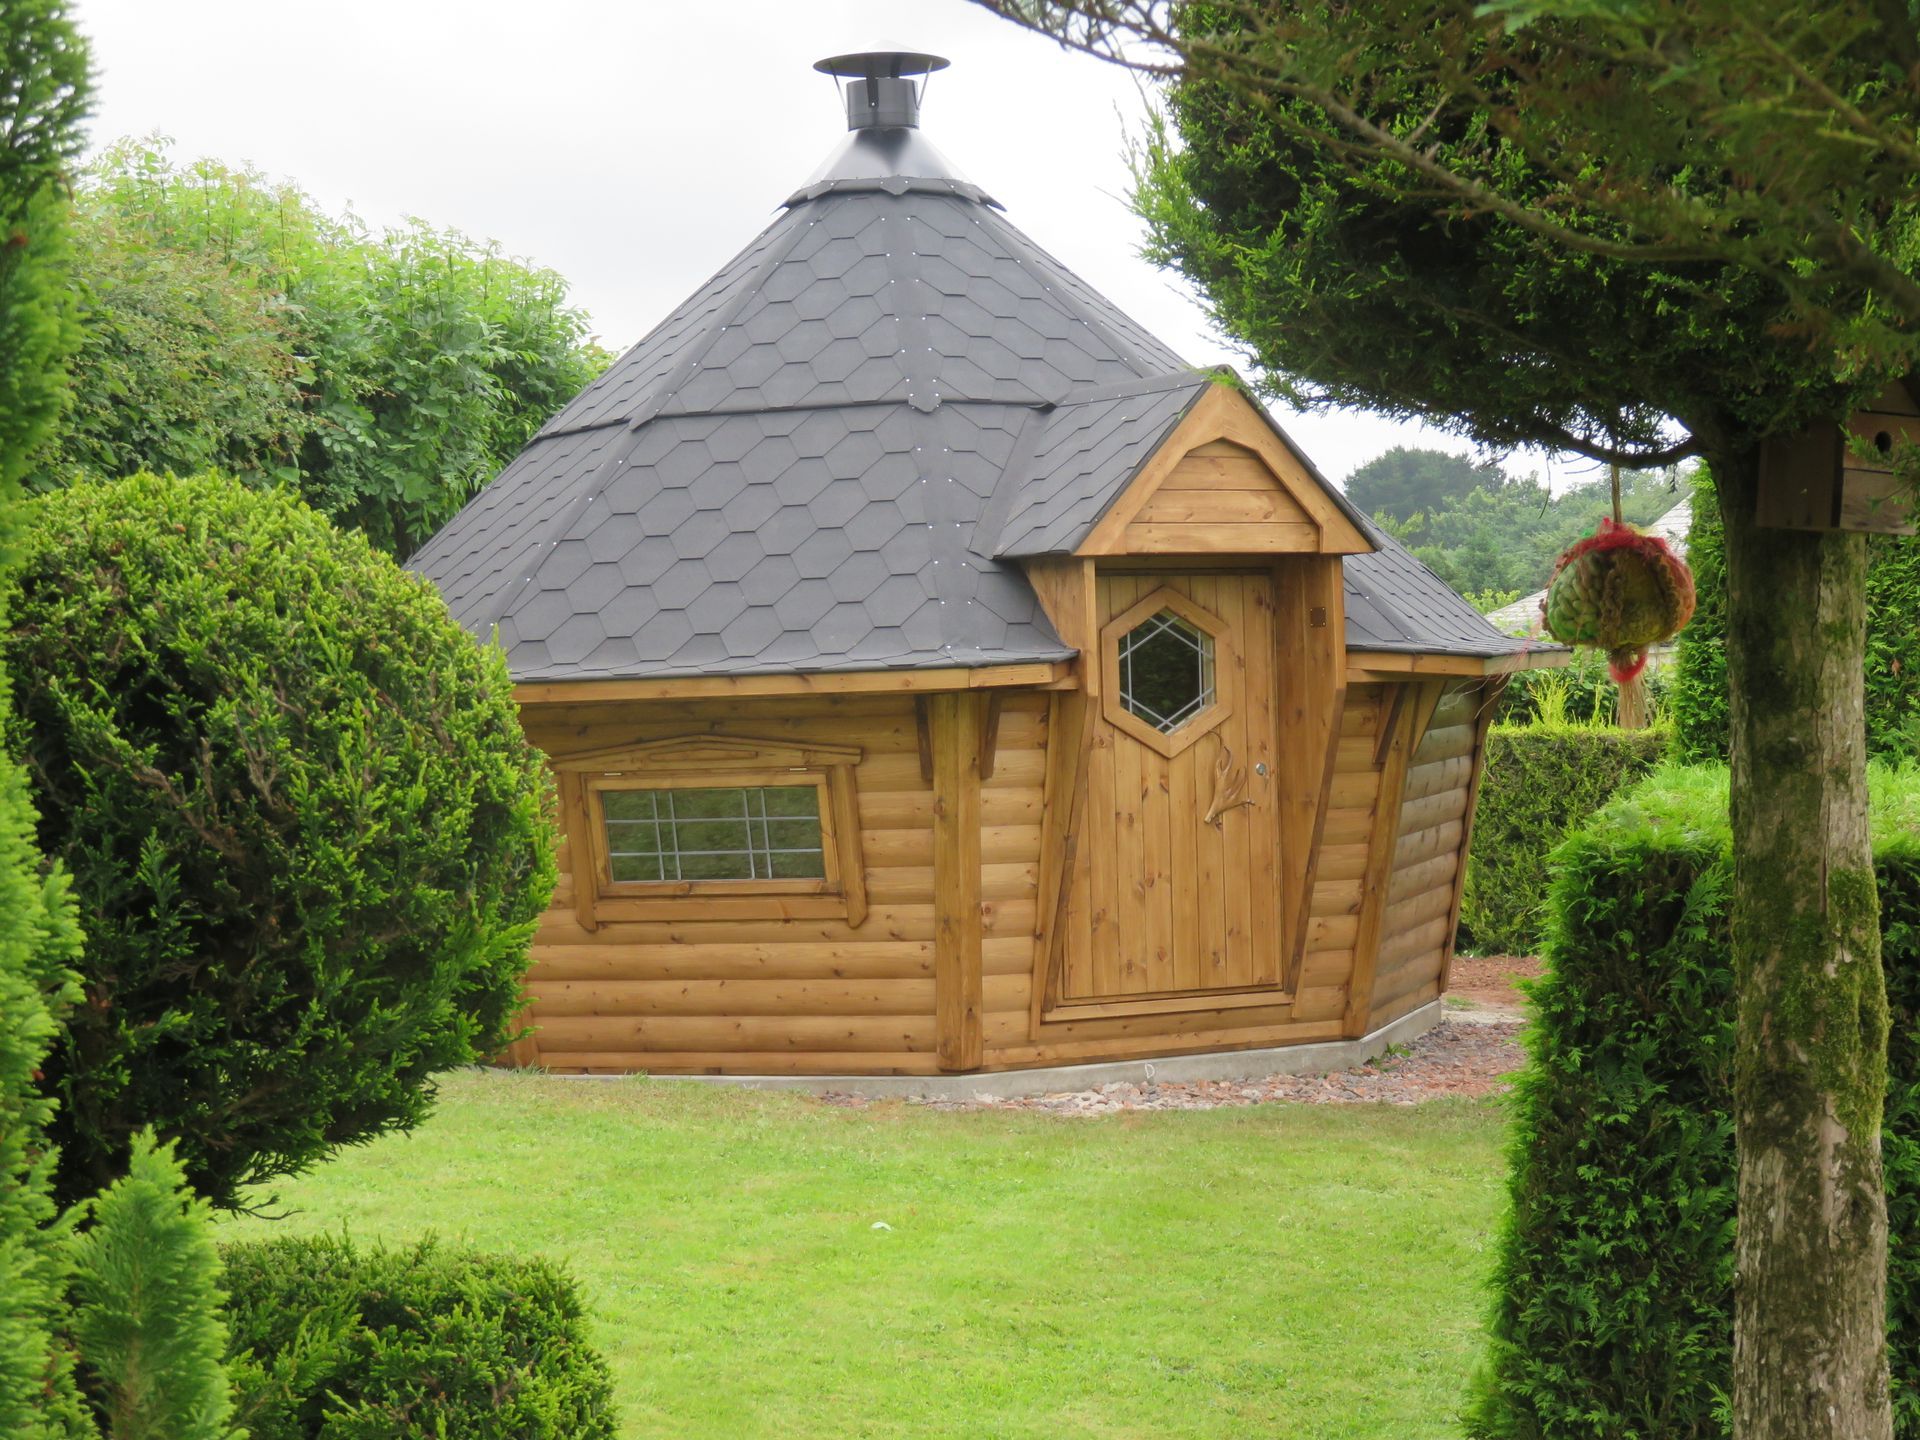 barbecue hut nestled in garden corner